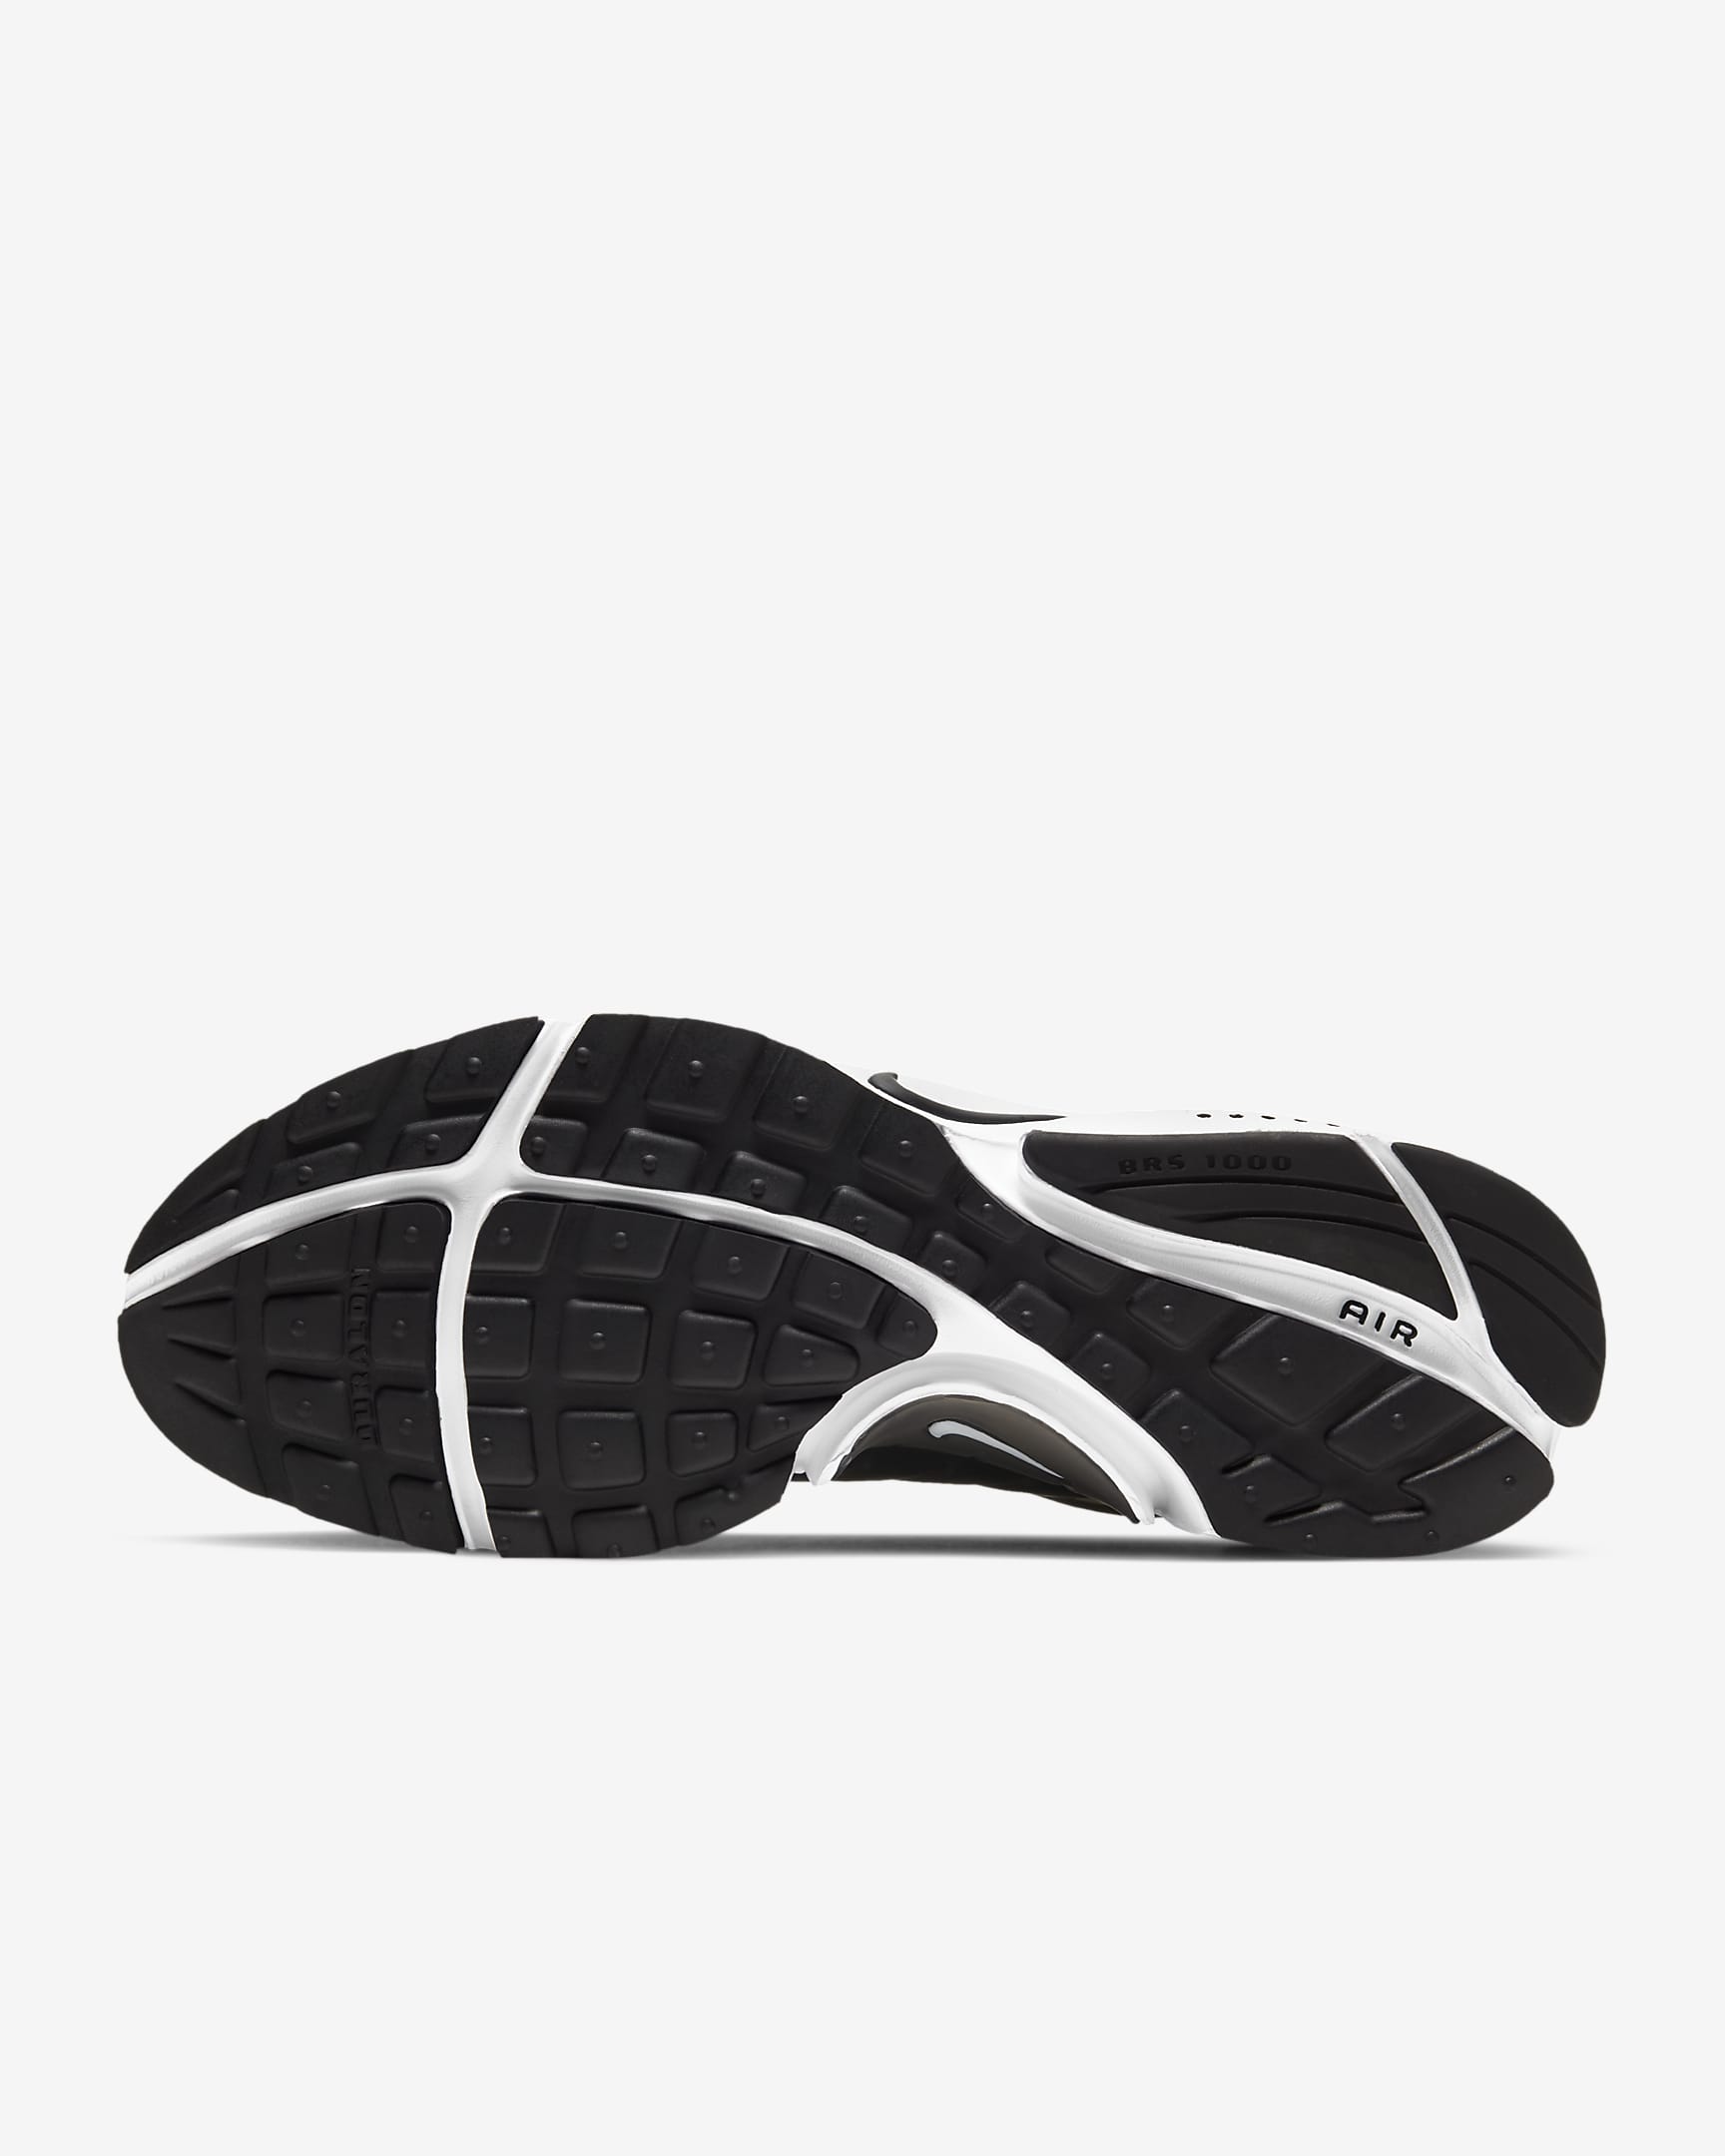 Chaussure Nike Air Presto pour Homme - Noir/Blanc/Noir